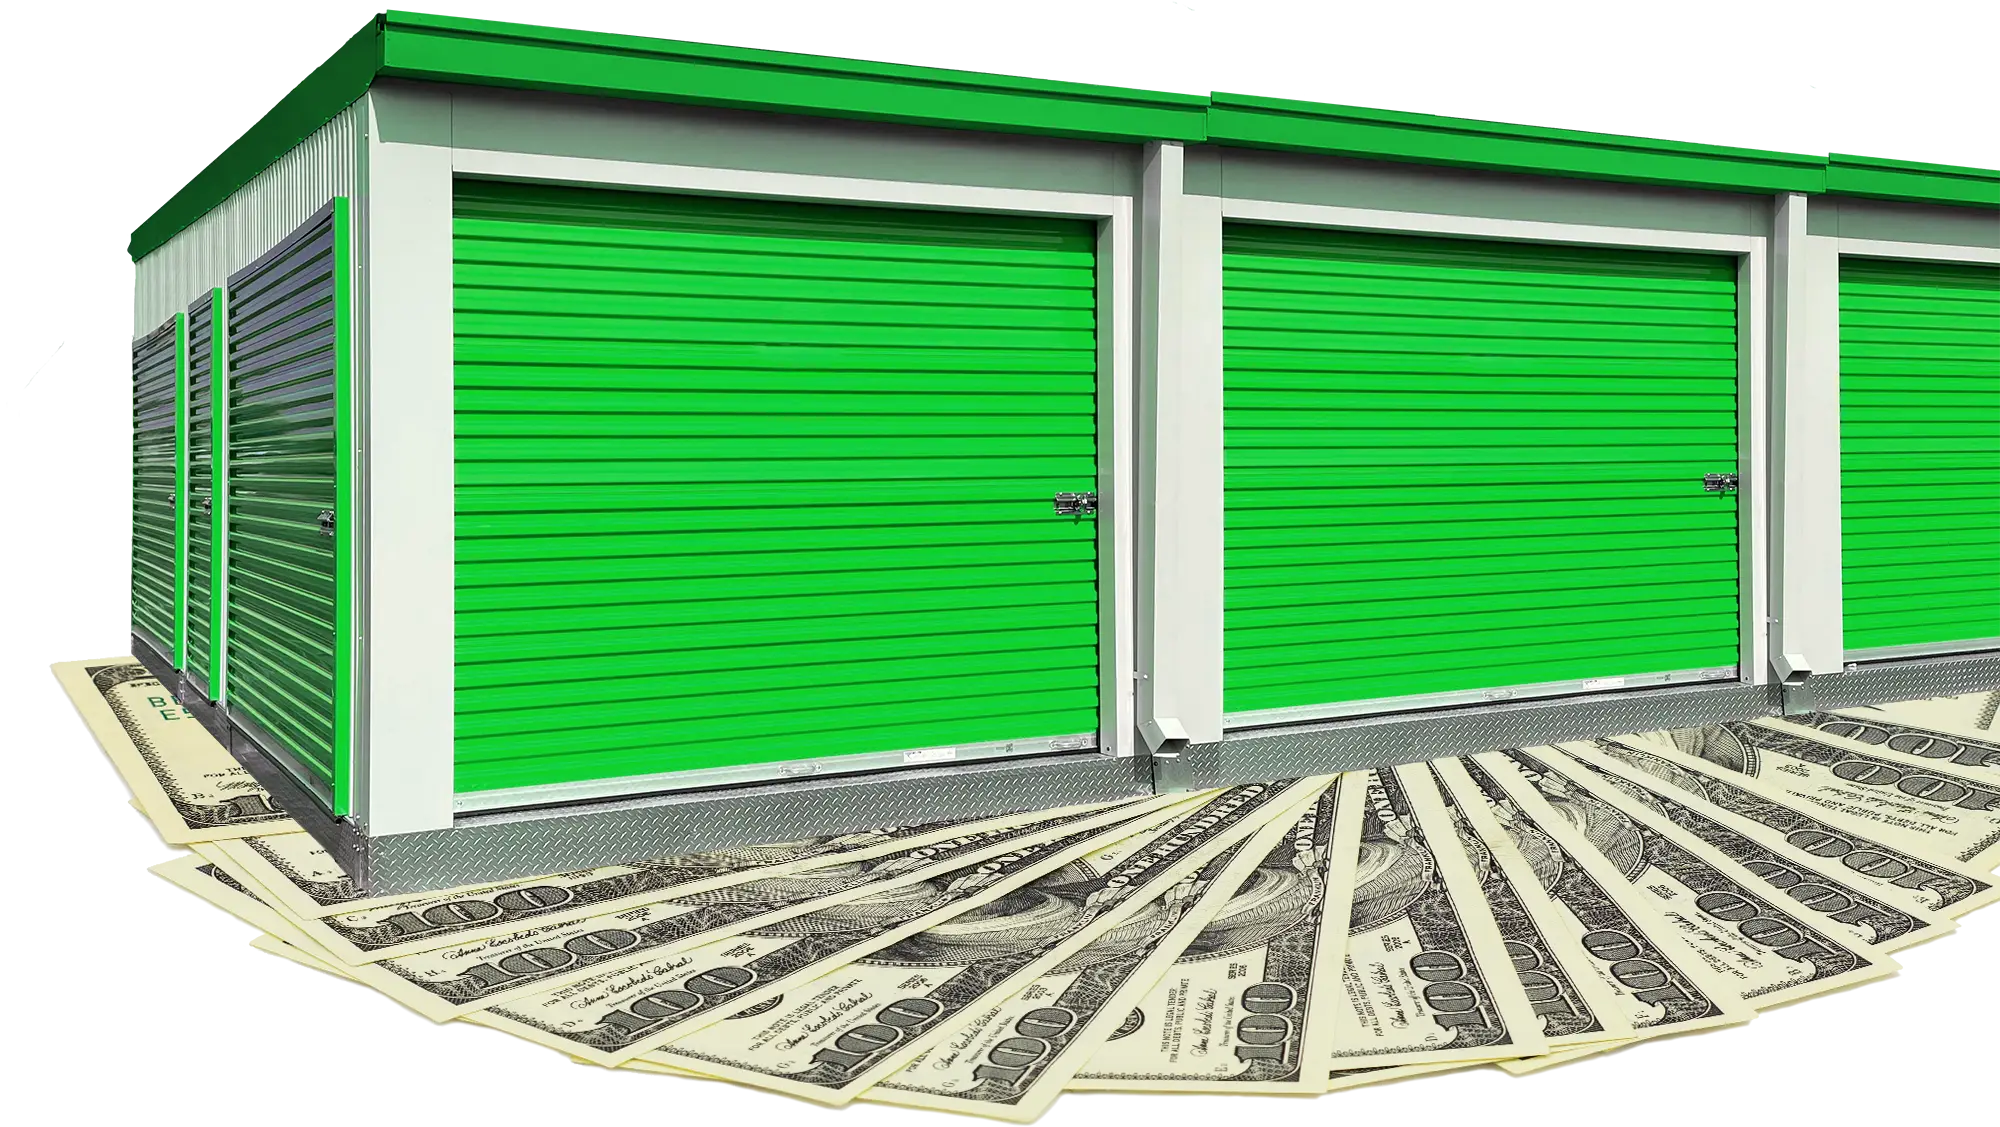 MASS Green storage units with money